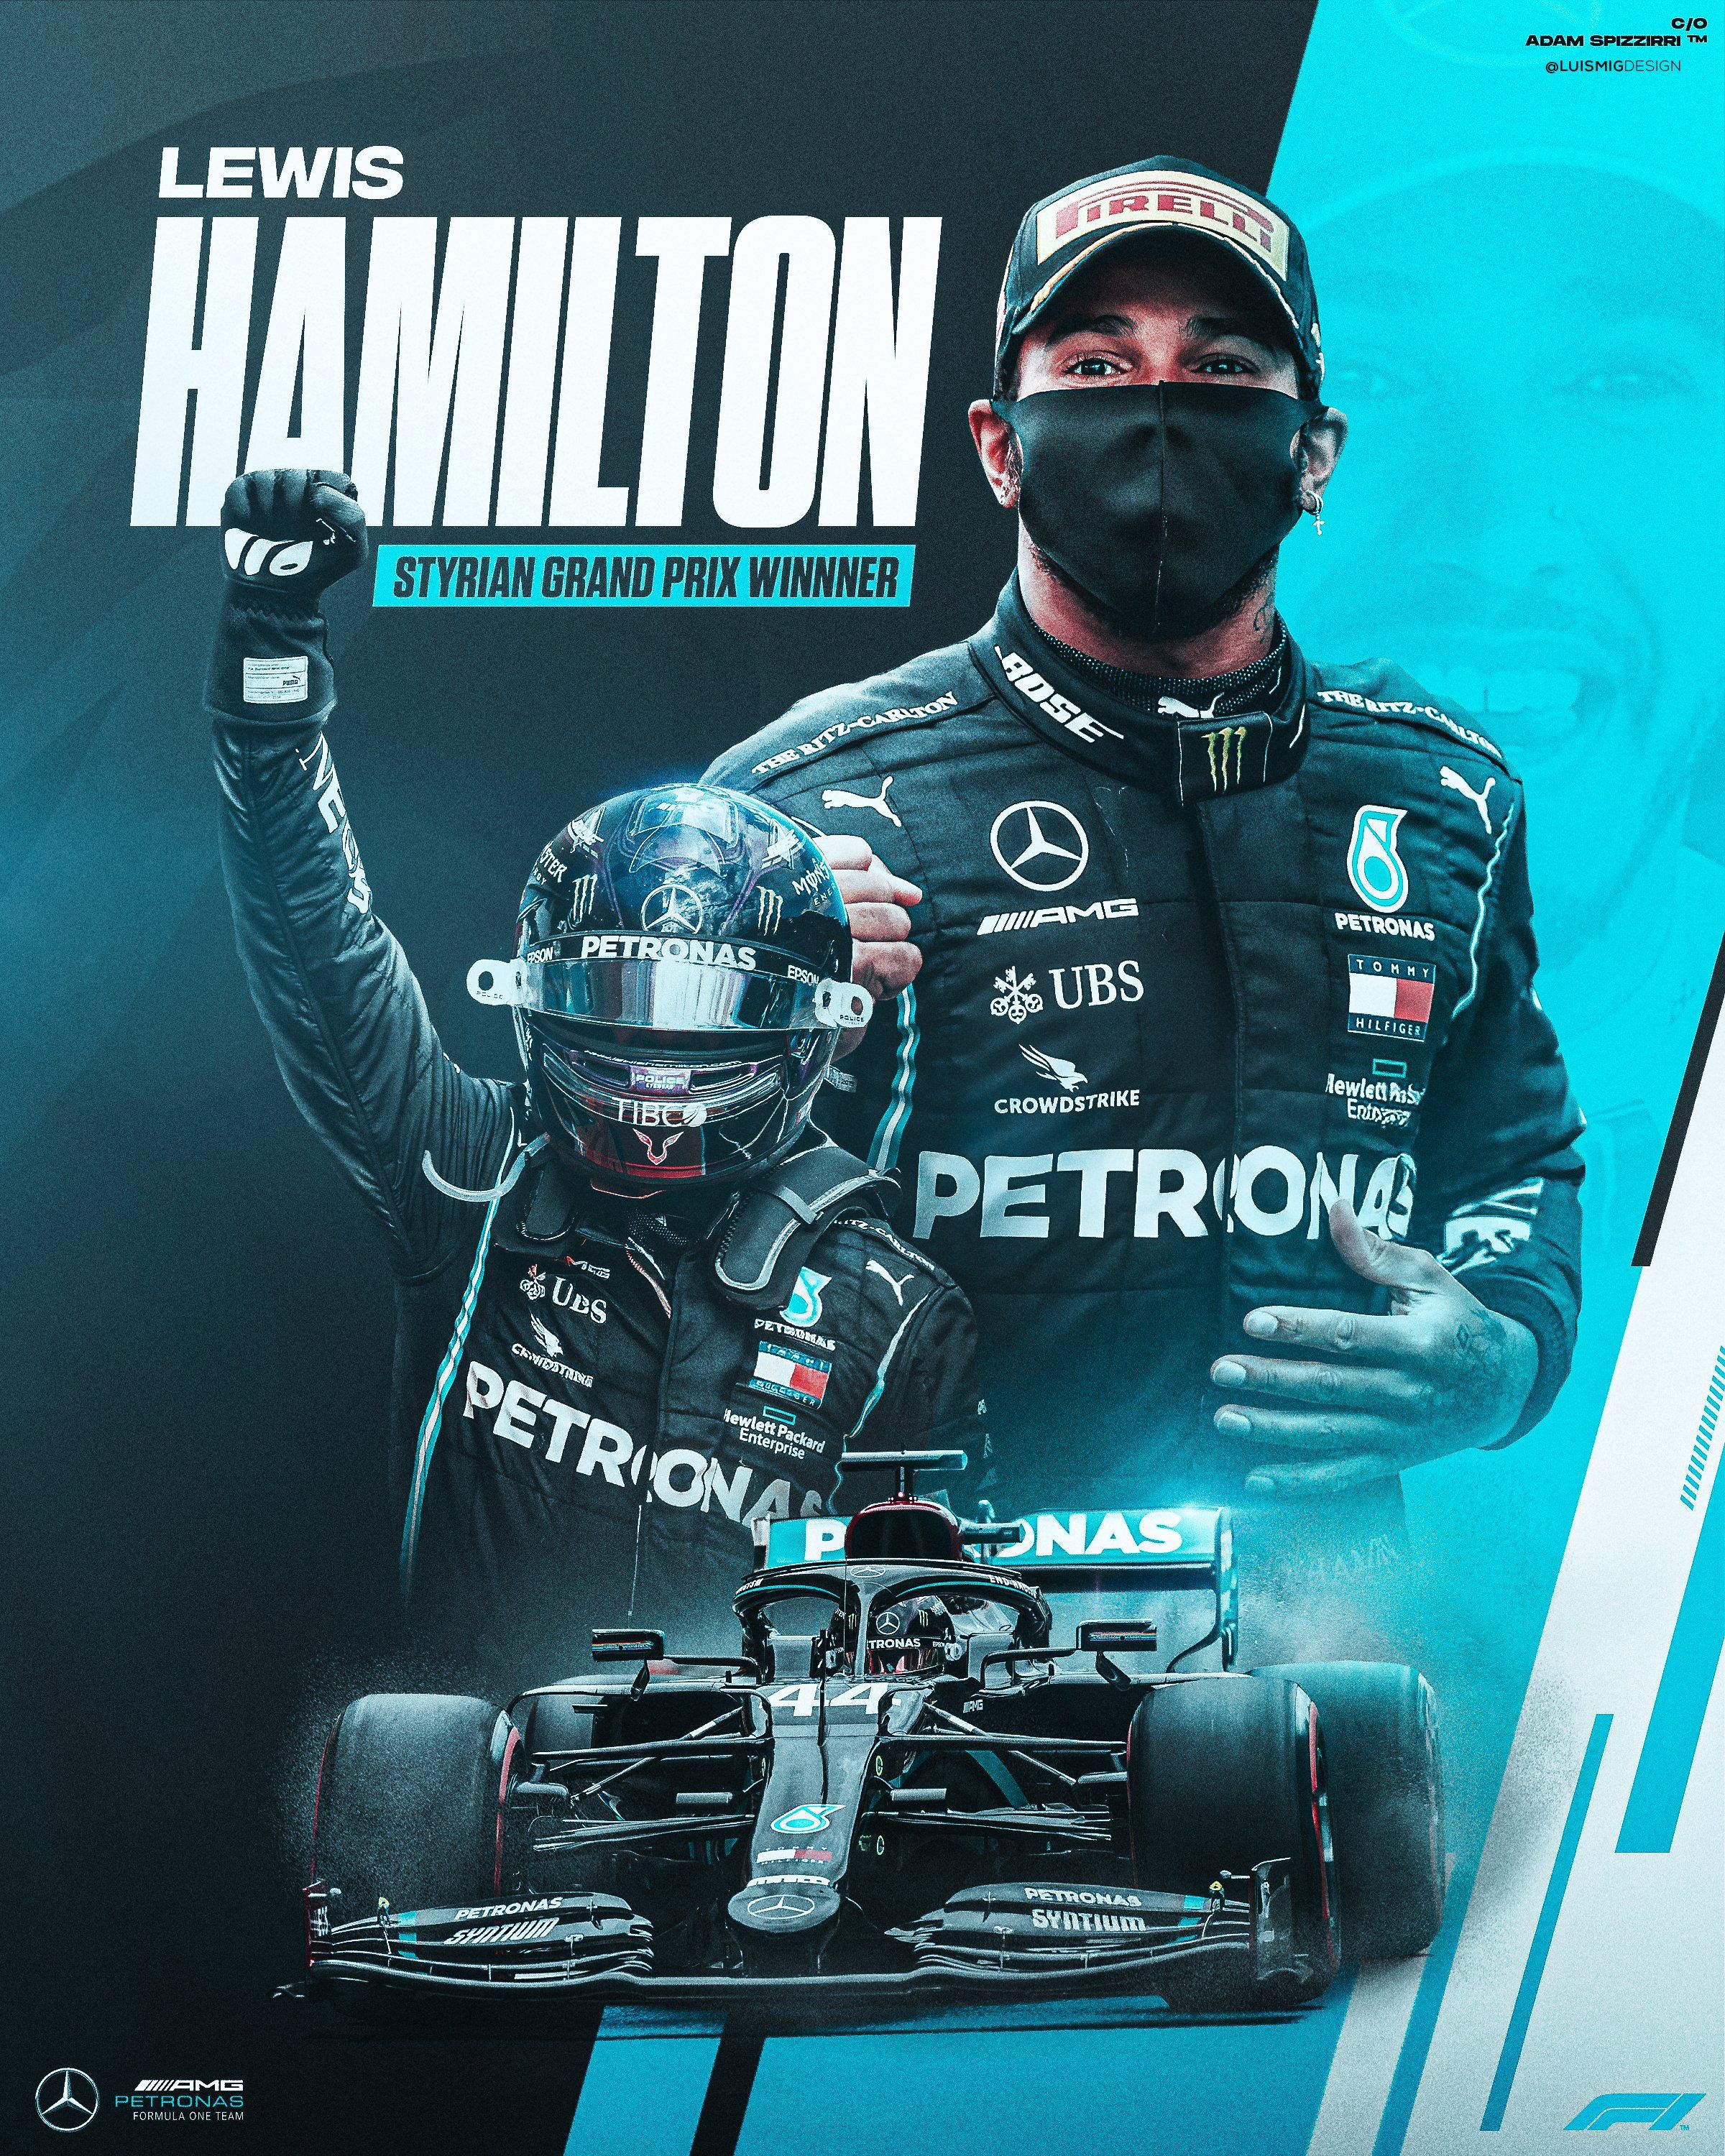 Free download Lewis Hamilton Concept Poster on Behance Lewis hamilton